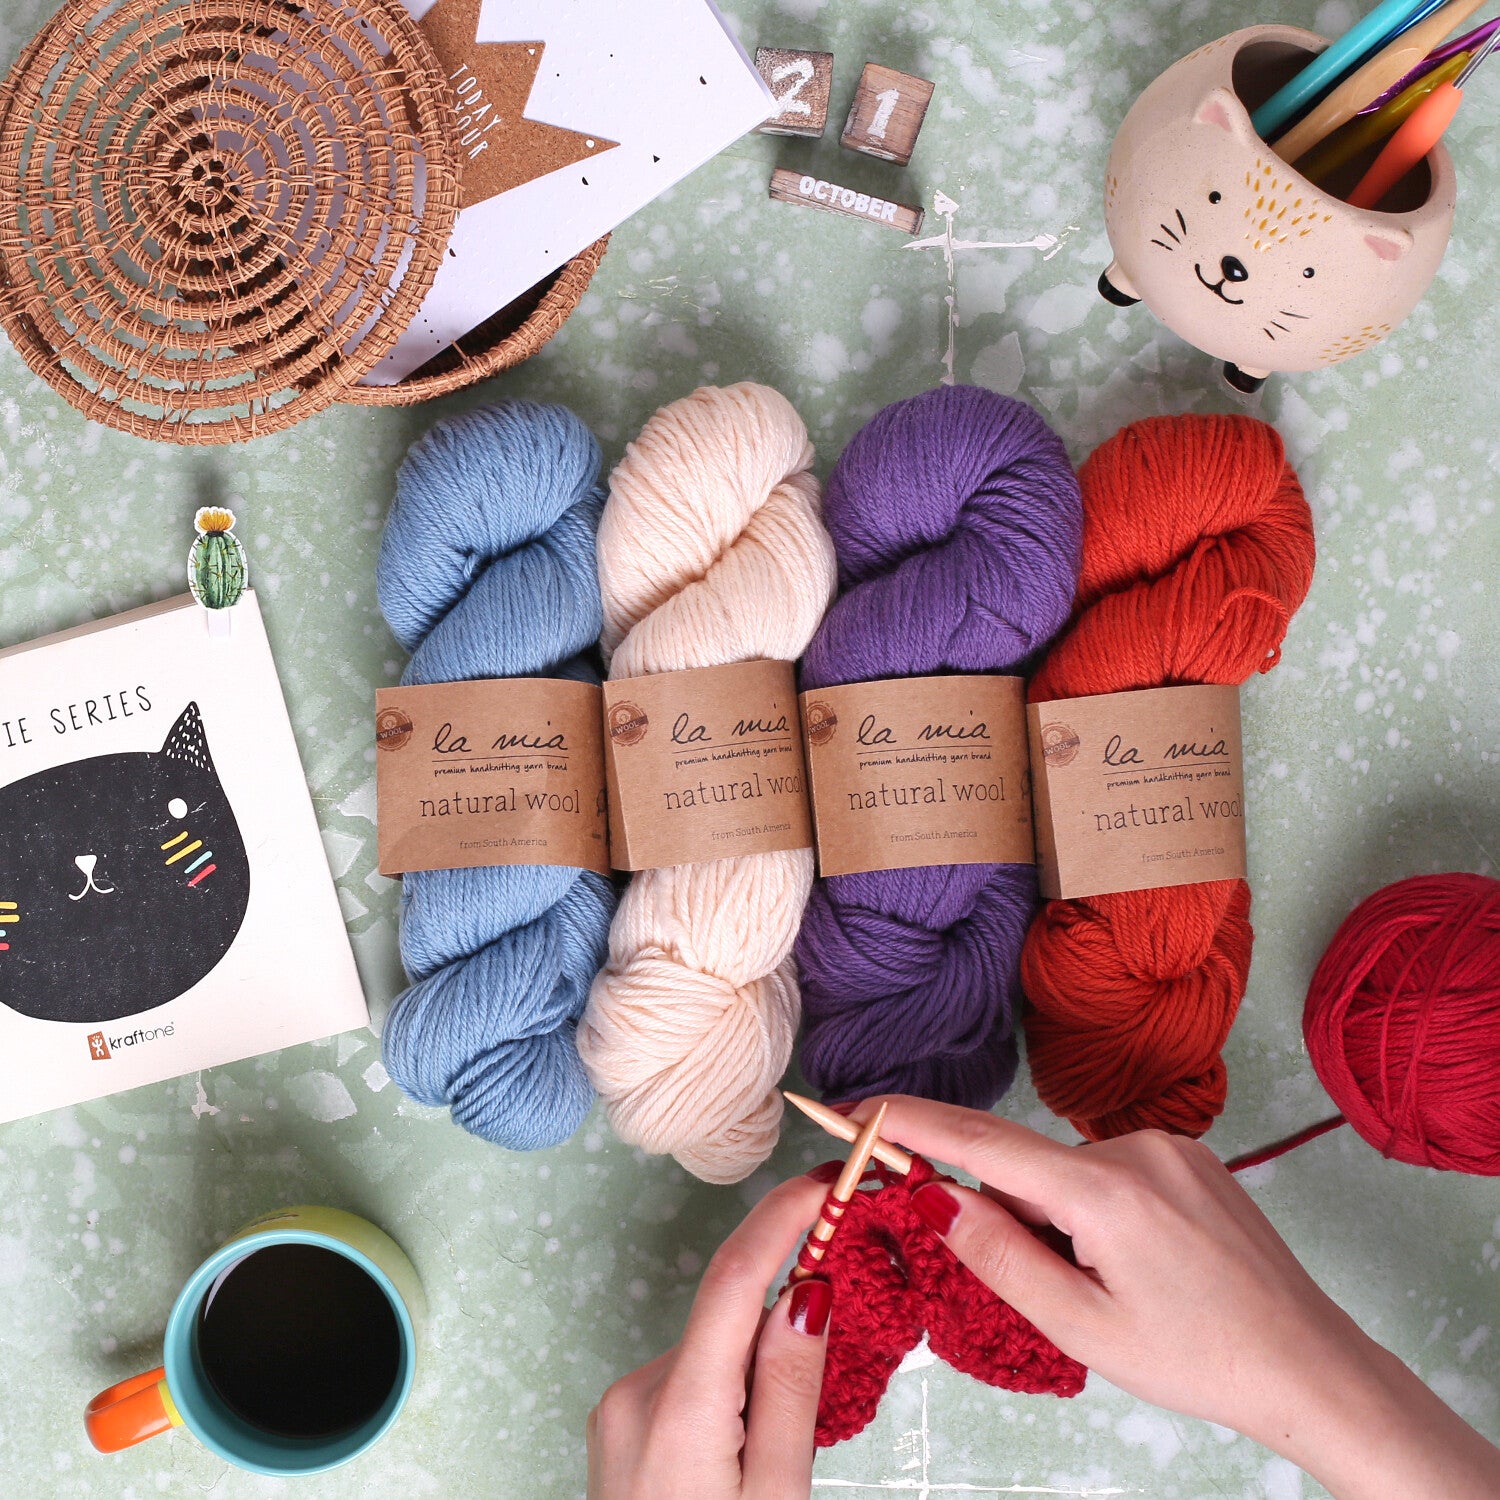 La Mia Natural Wool Knitting Yarn - H6